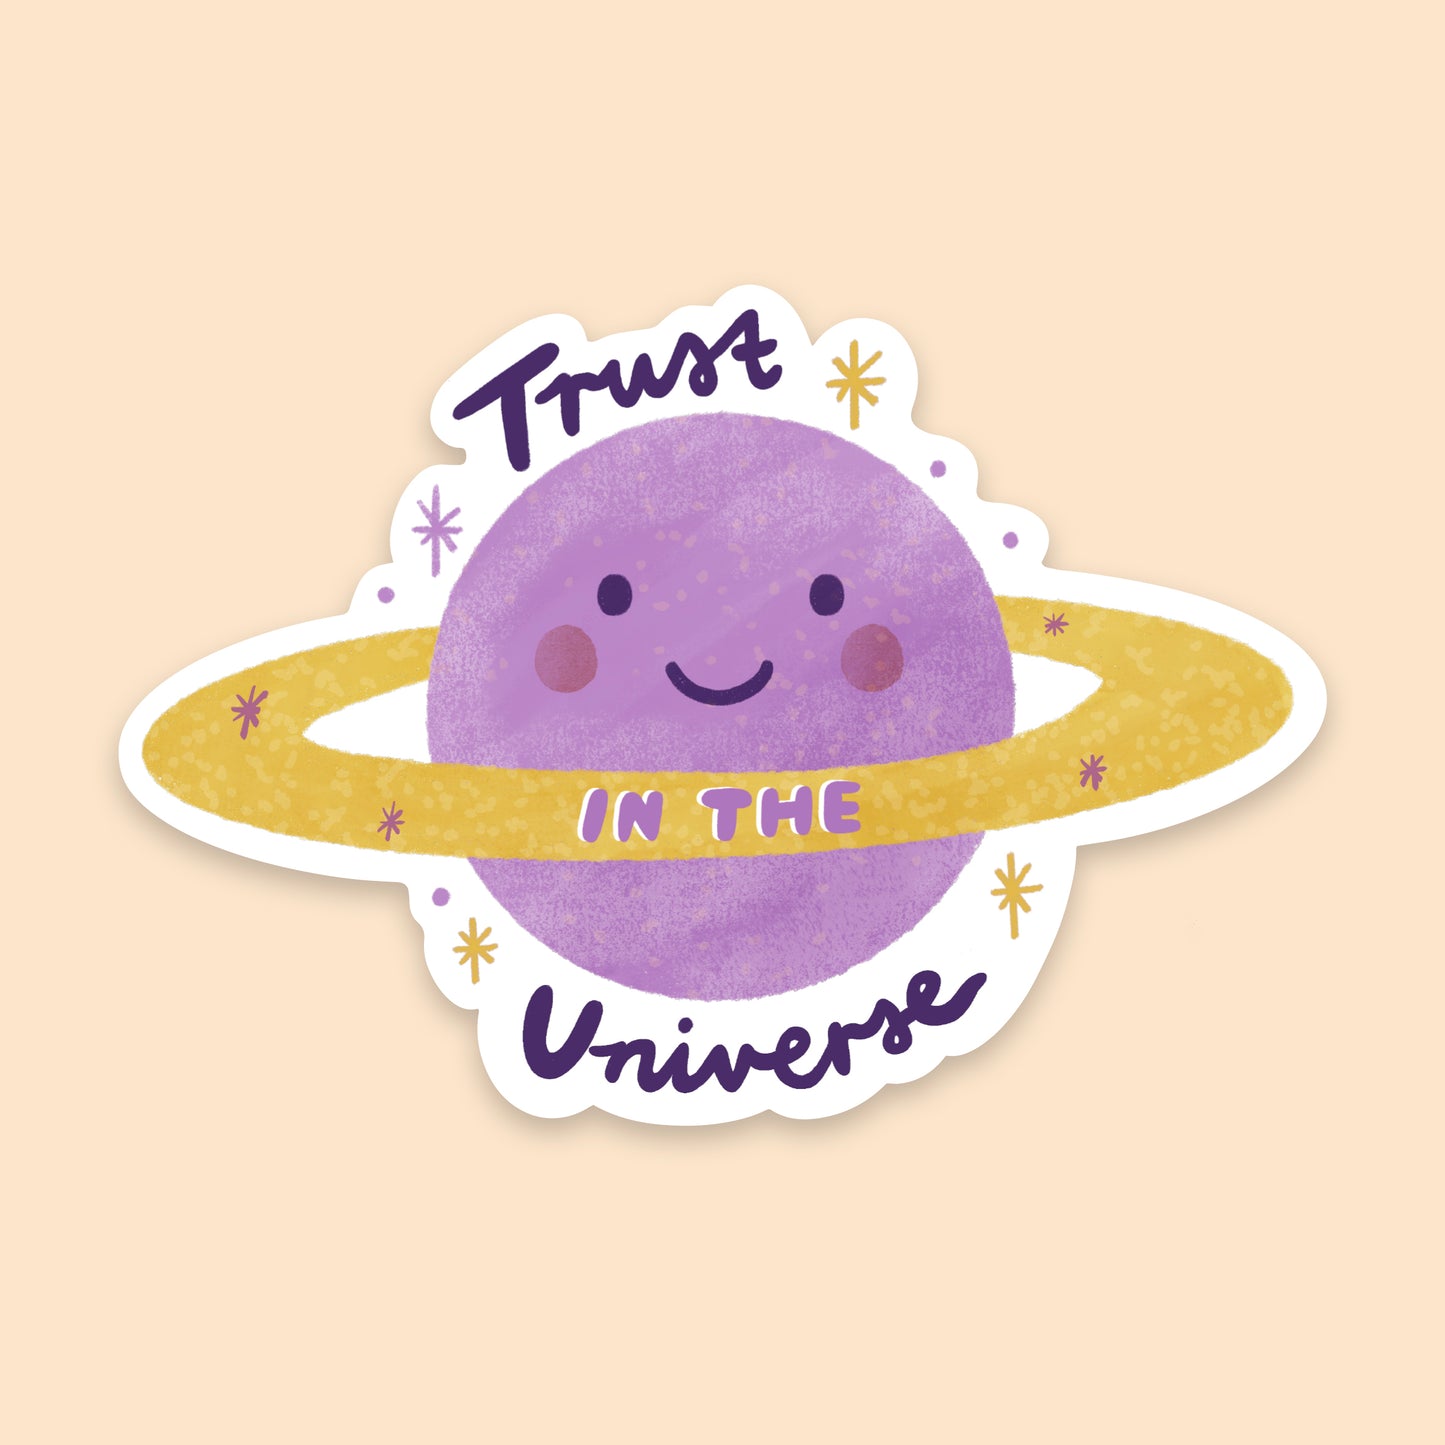 Trust in the Universe Sticker